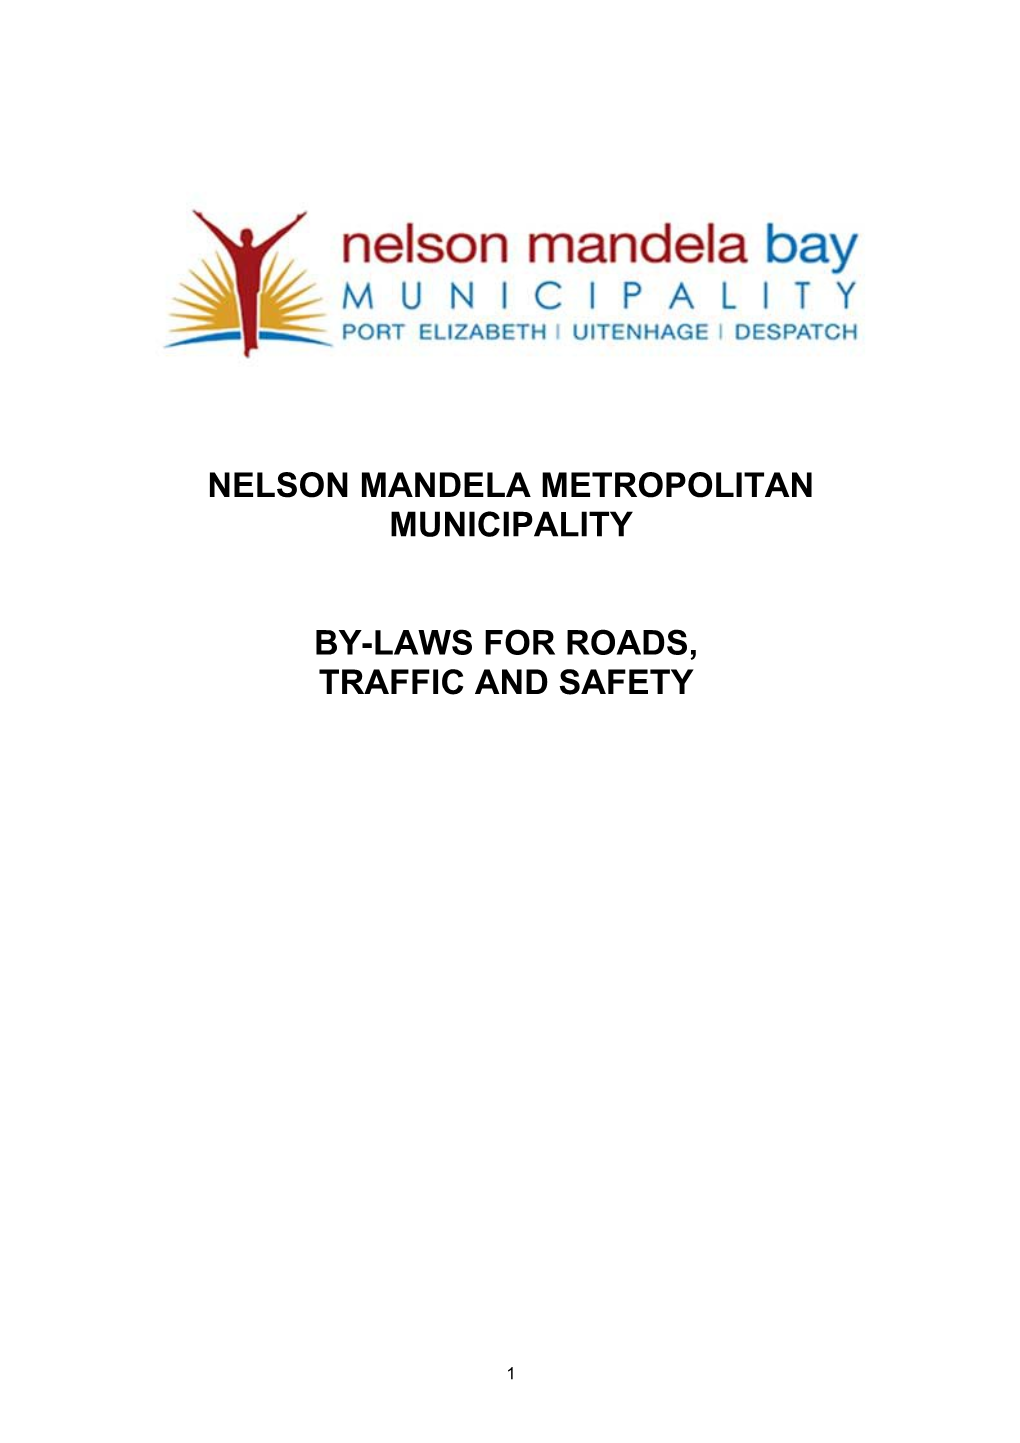 Nelson Mandela Metropolitan Municipality